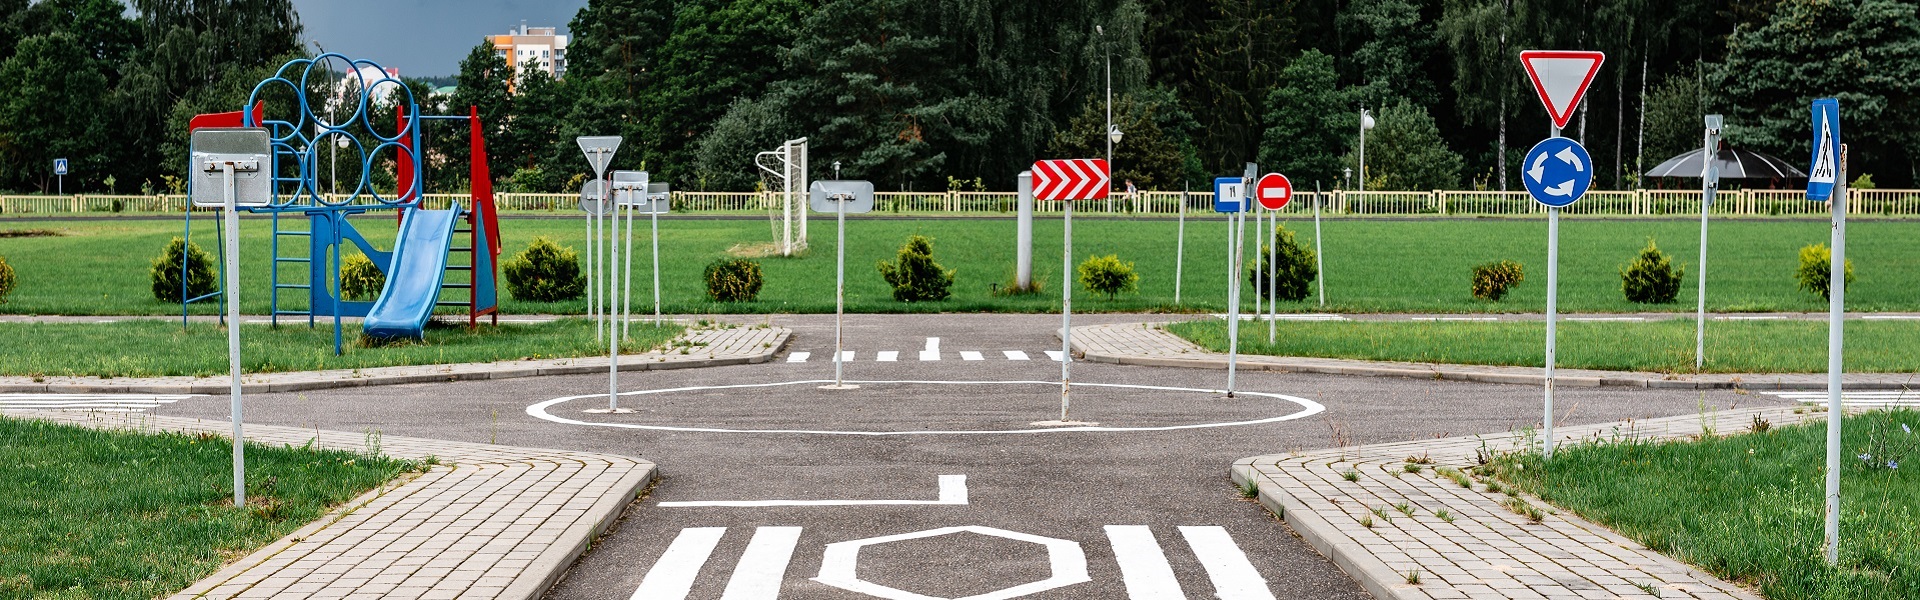 Rent a car Belgrade | Driving school Zurich and Oerlikon